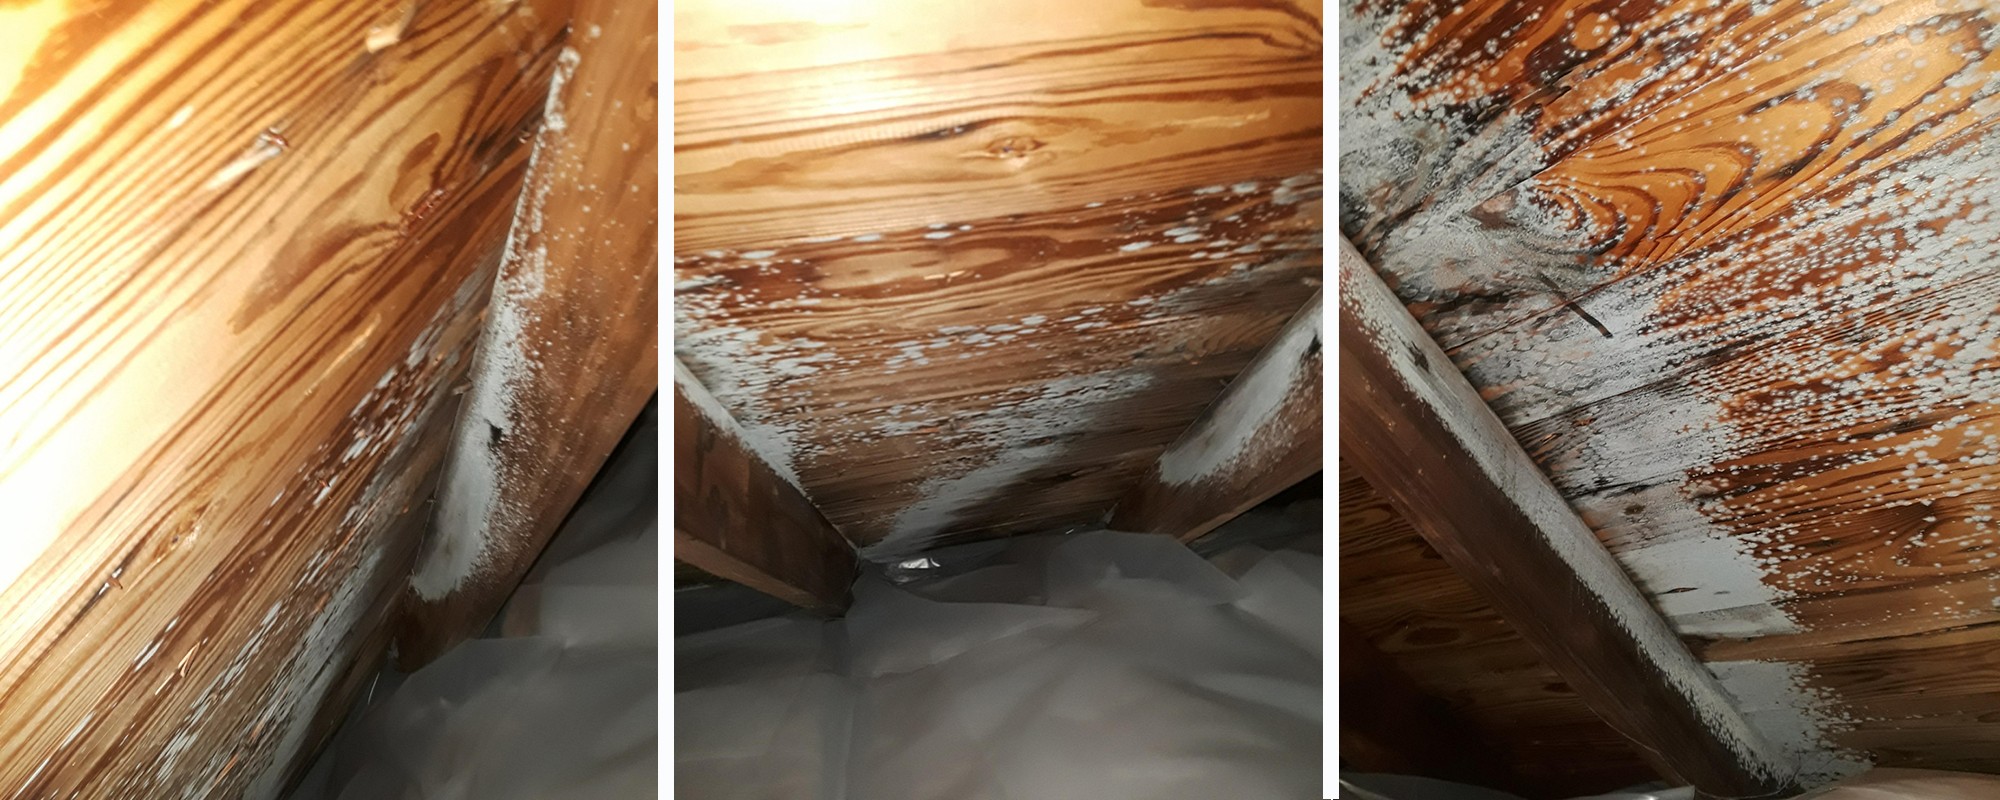 attic frost moisture problems nj